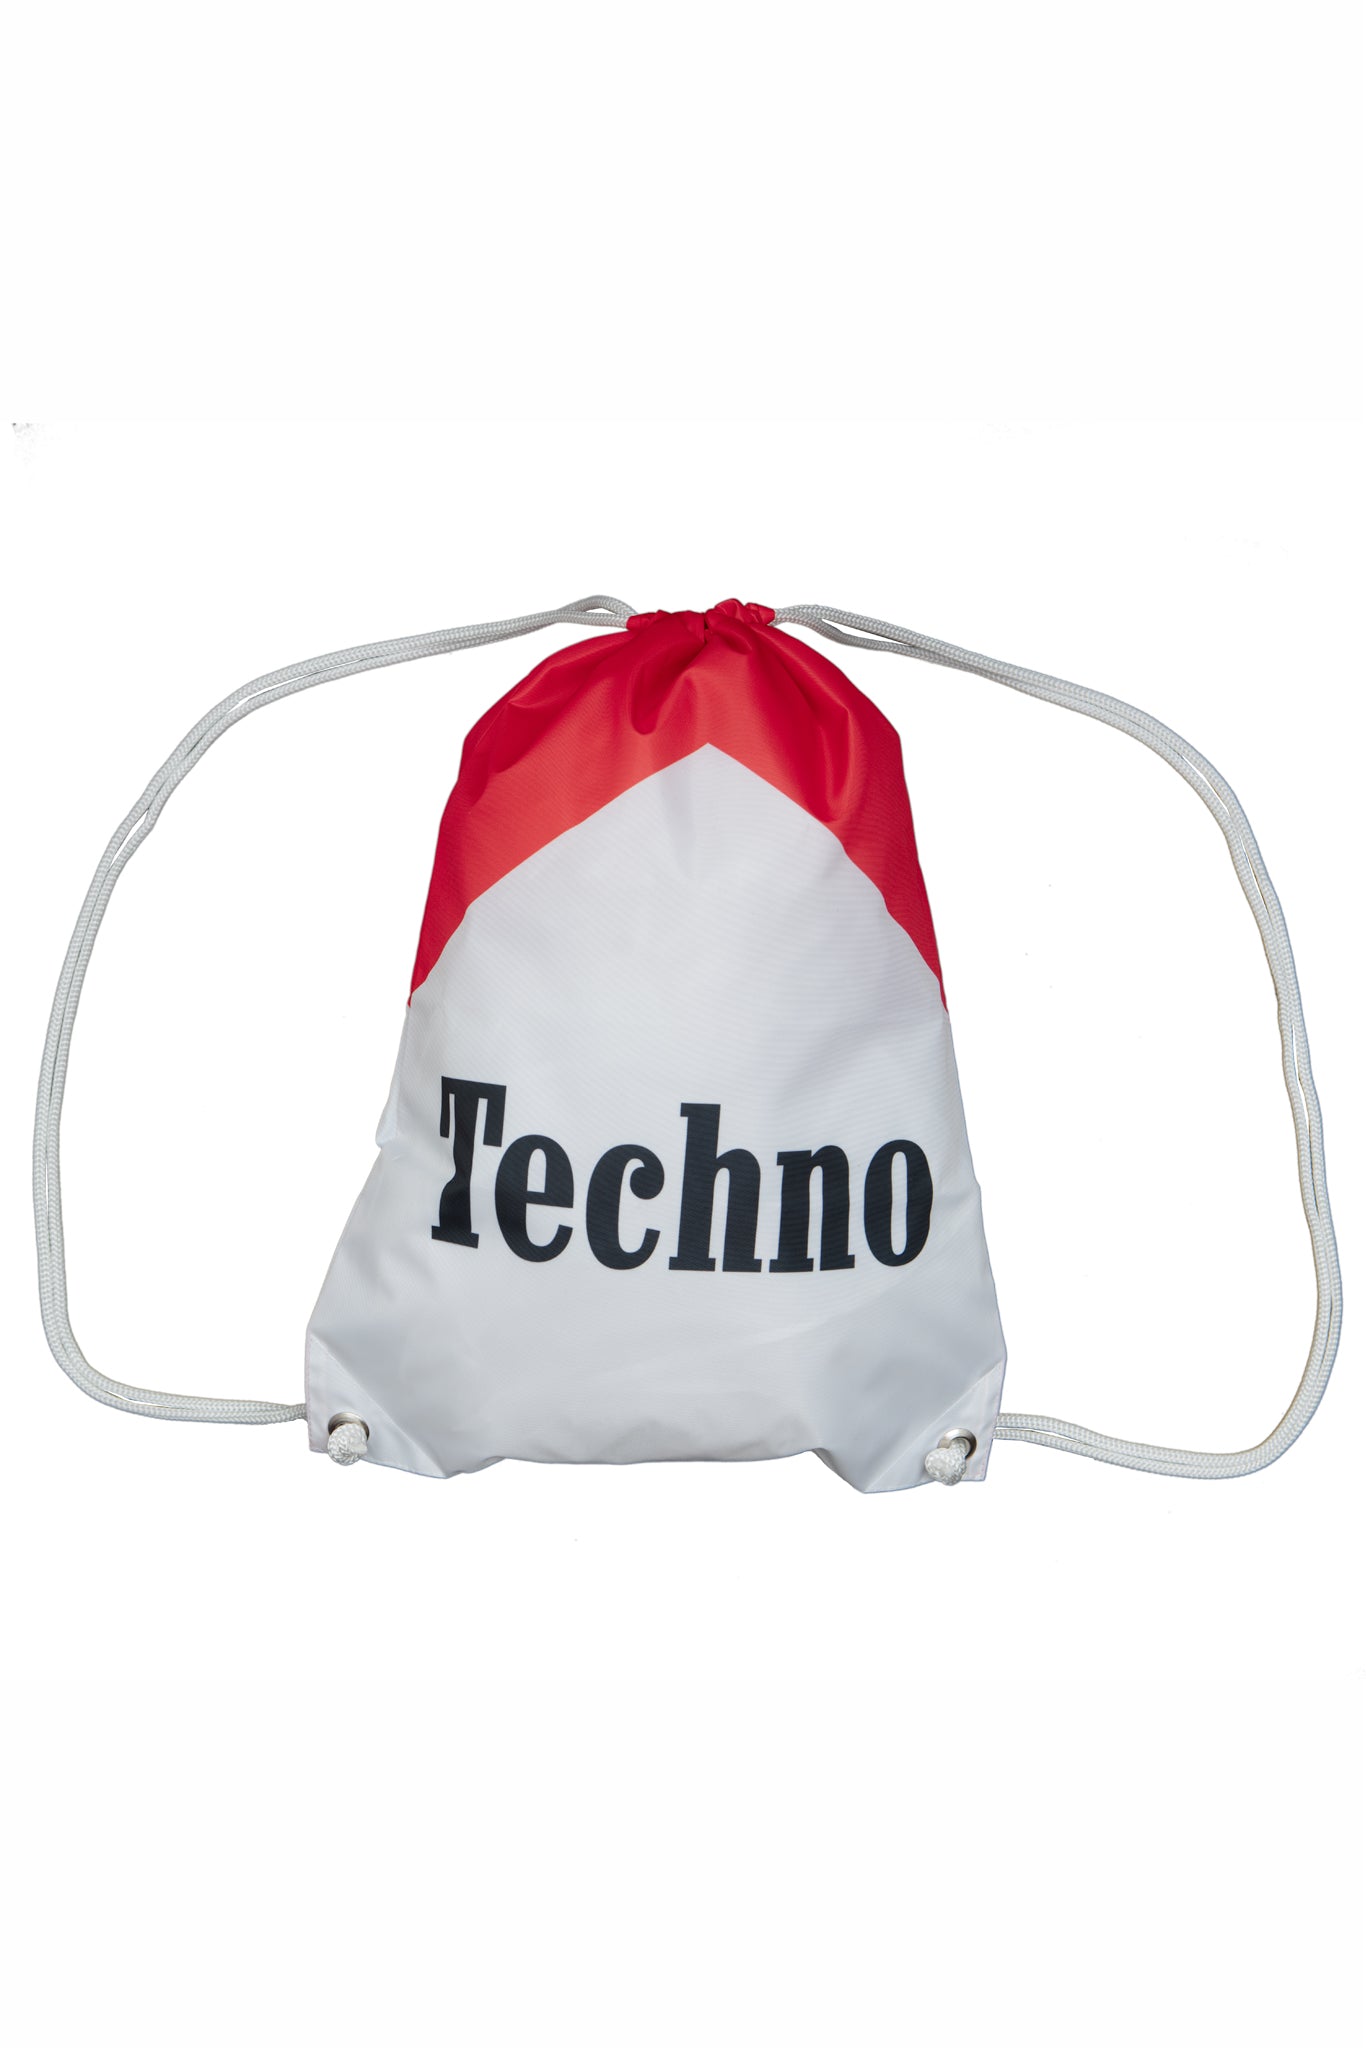 Techno heals рюкзак